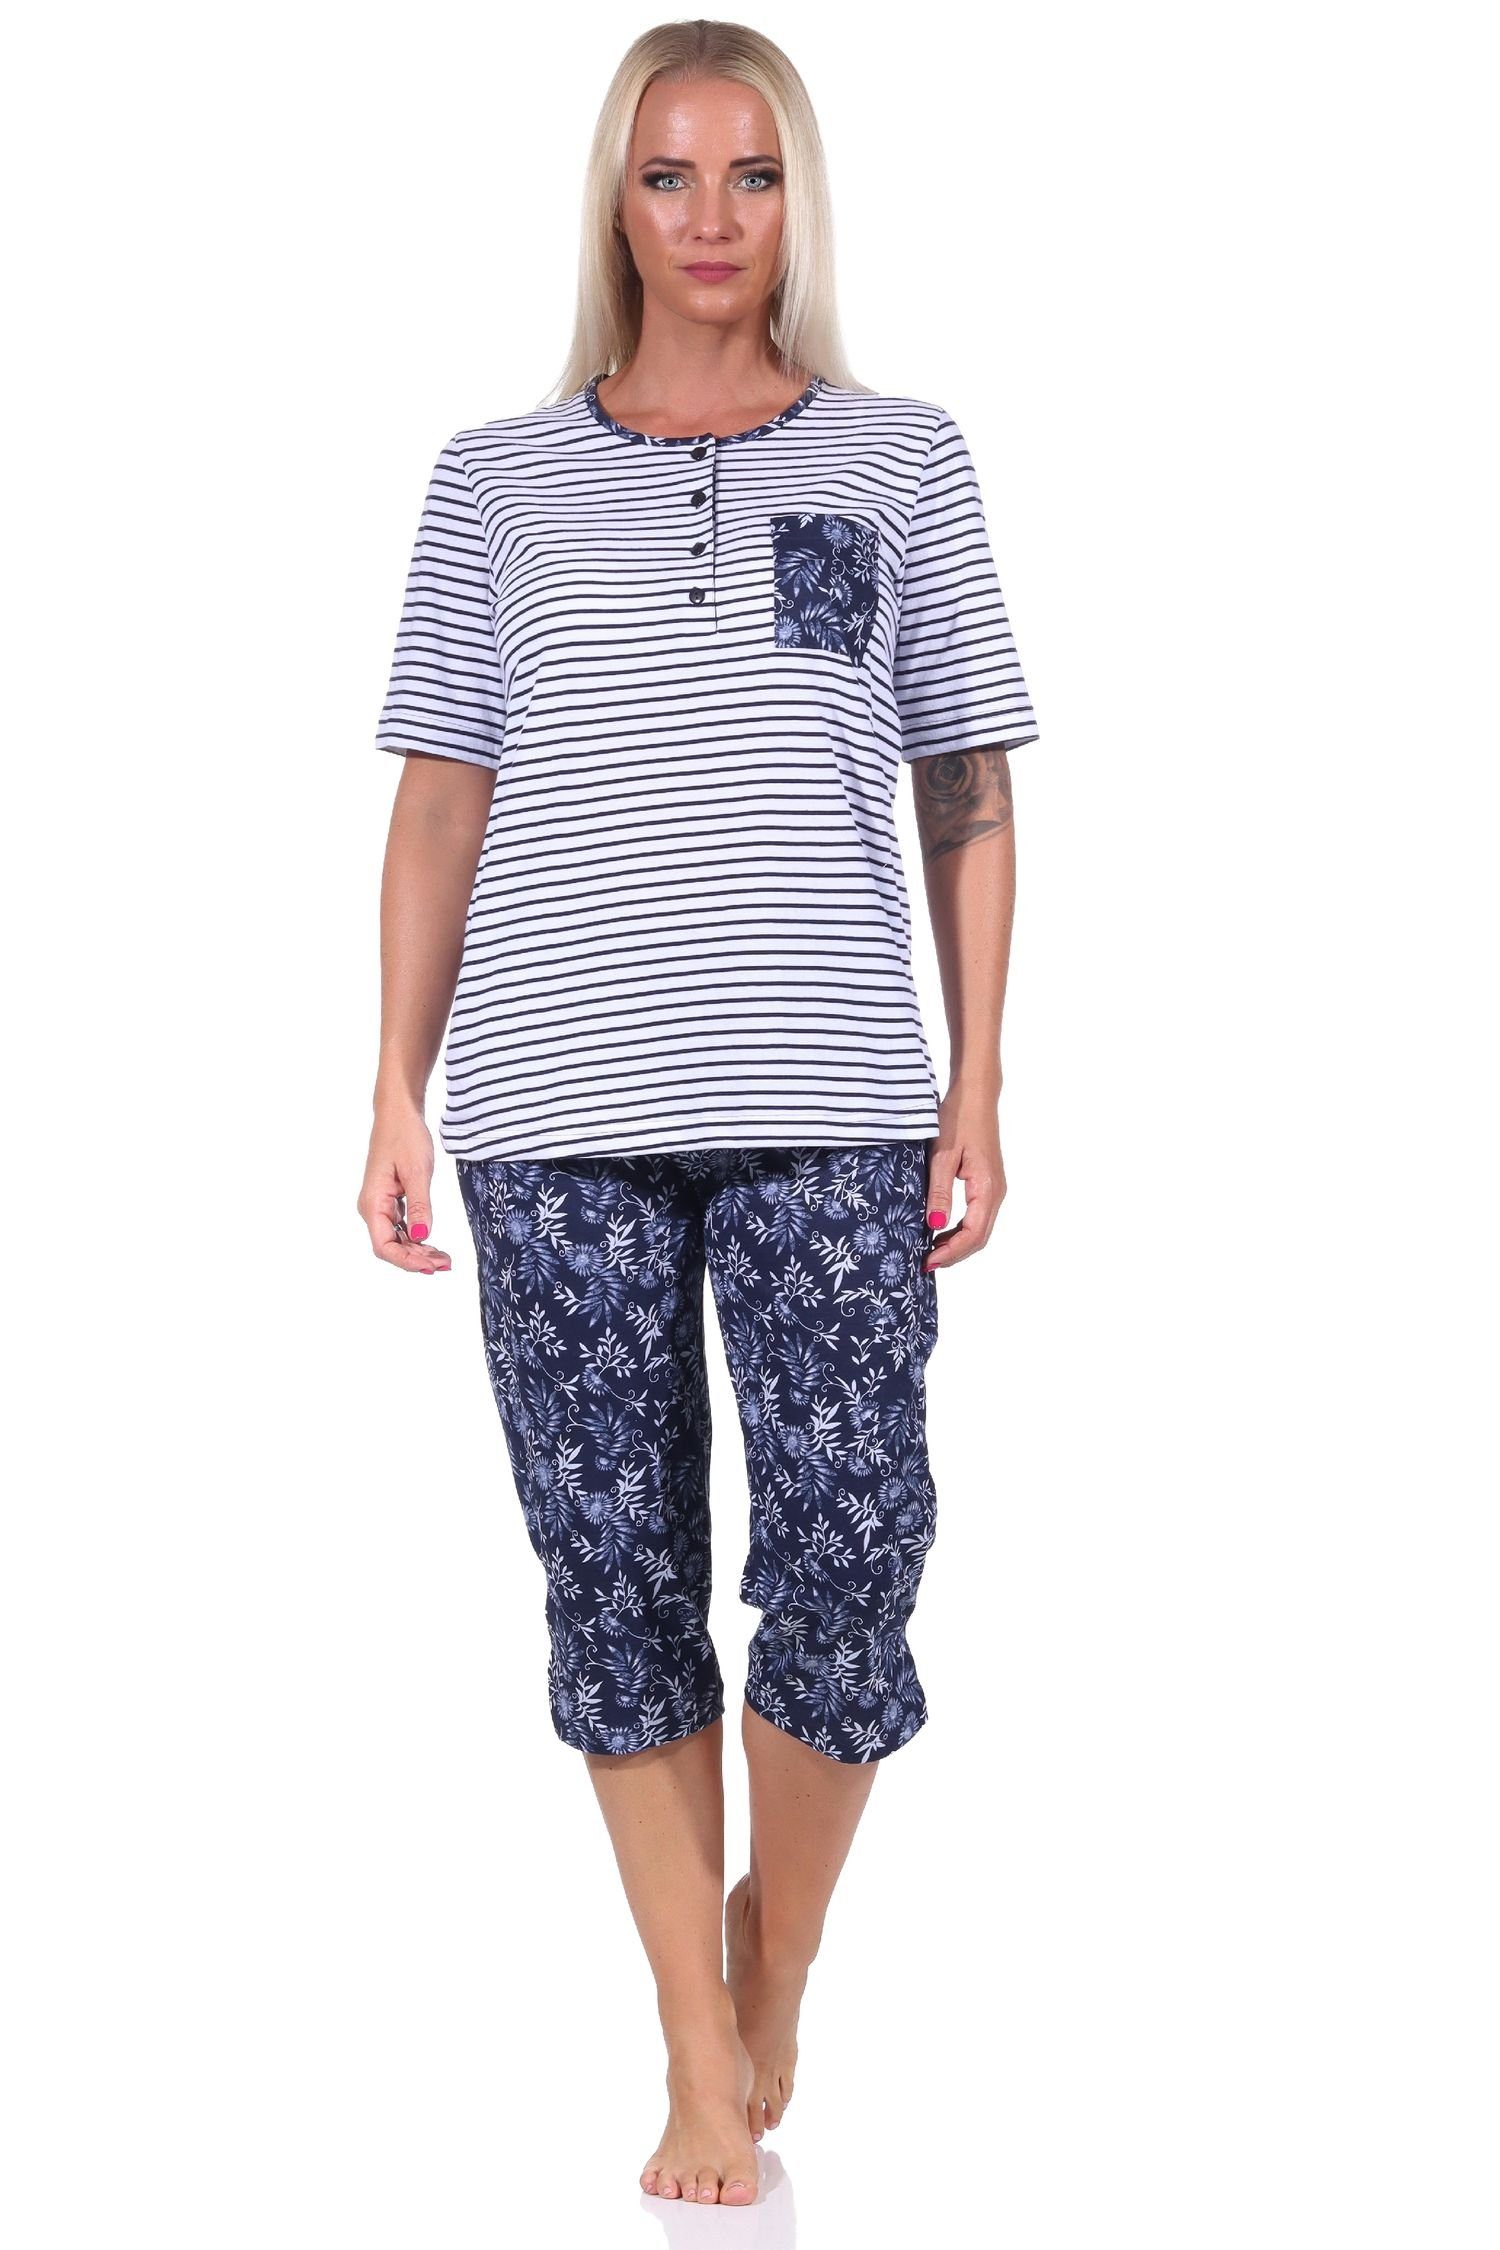 Hose kurzarm, Normann geblümt Capri Schlafanzug gestreift, Damen Pyjama Oberteil